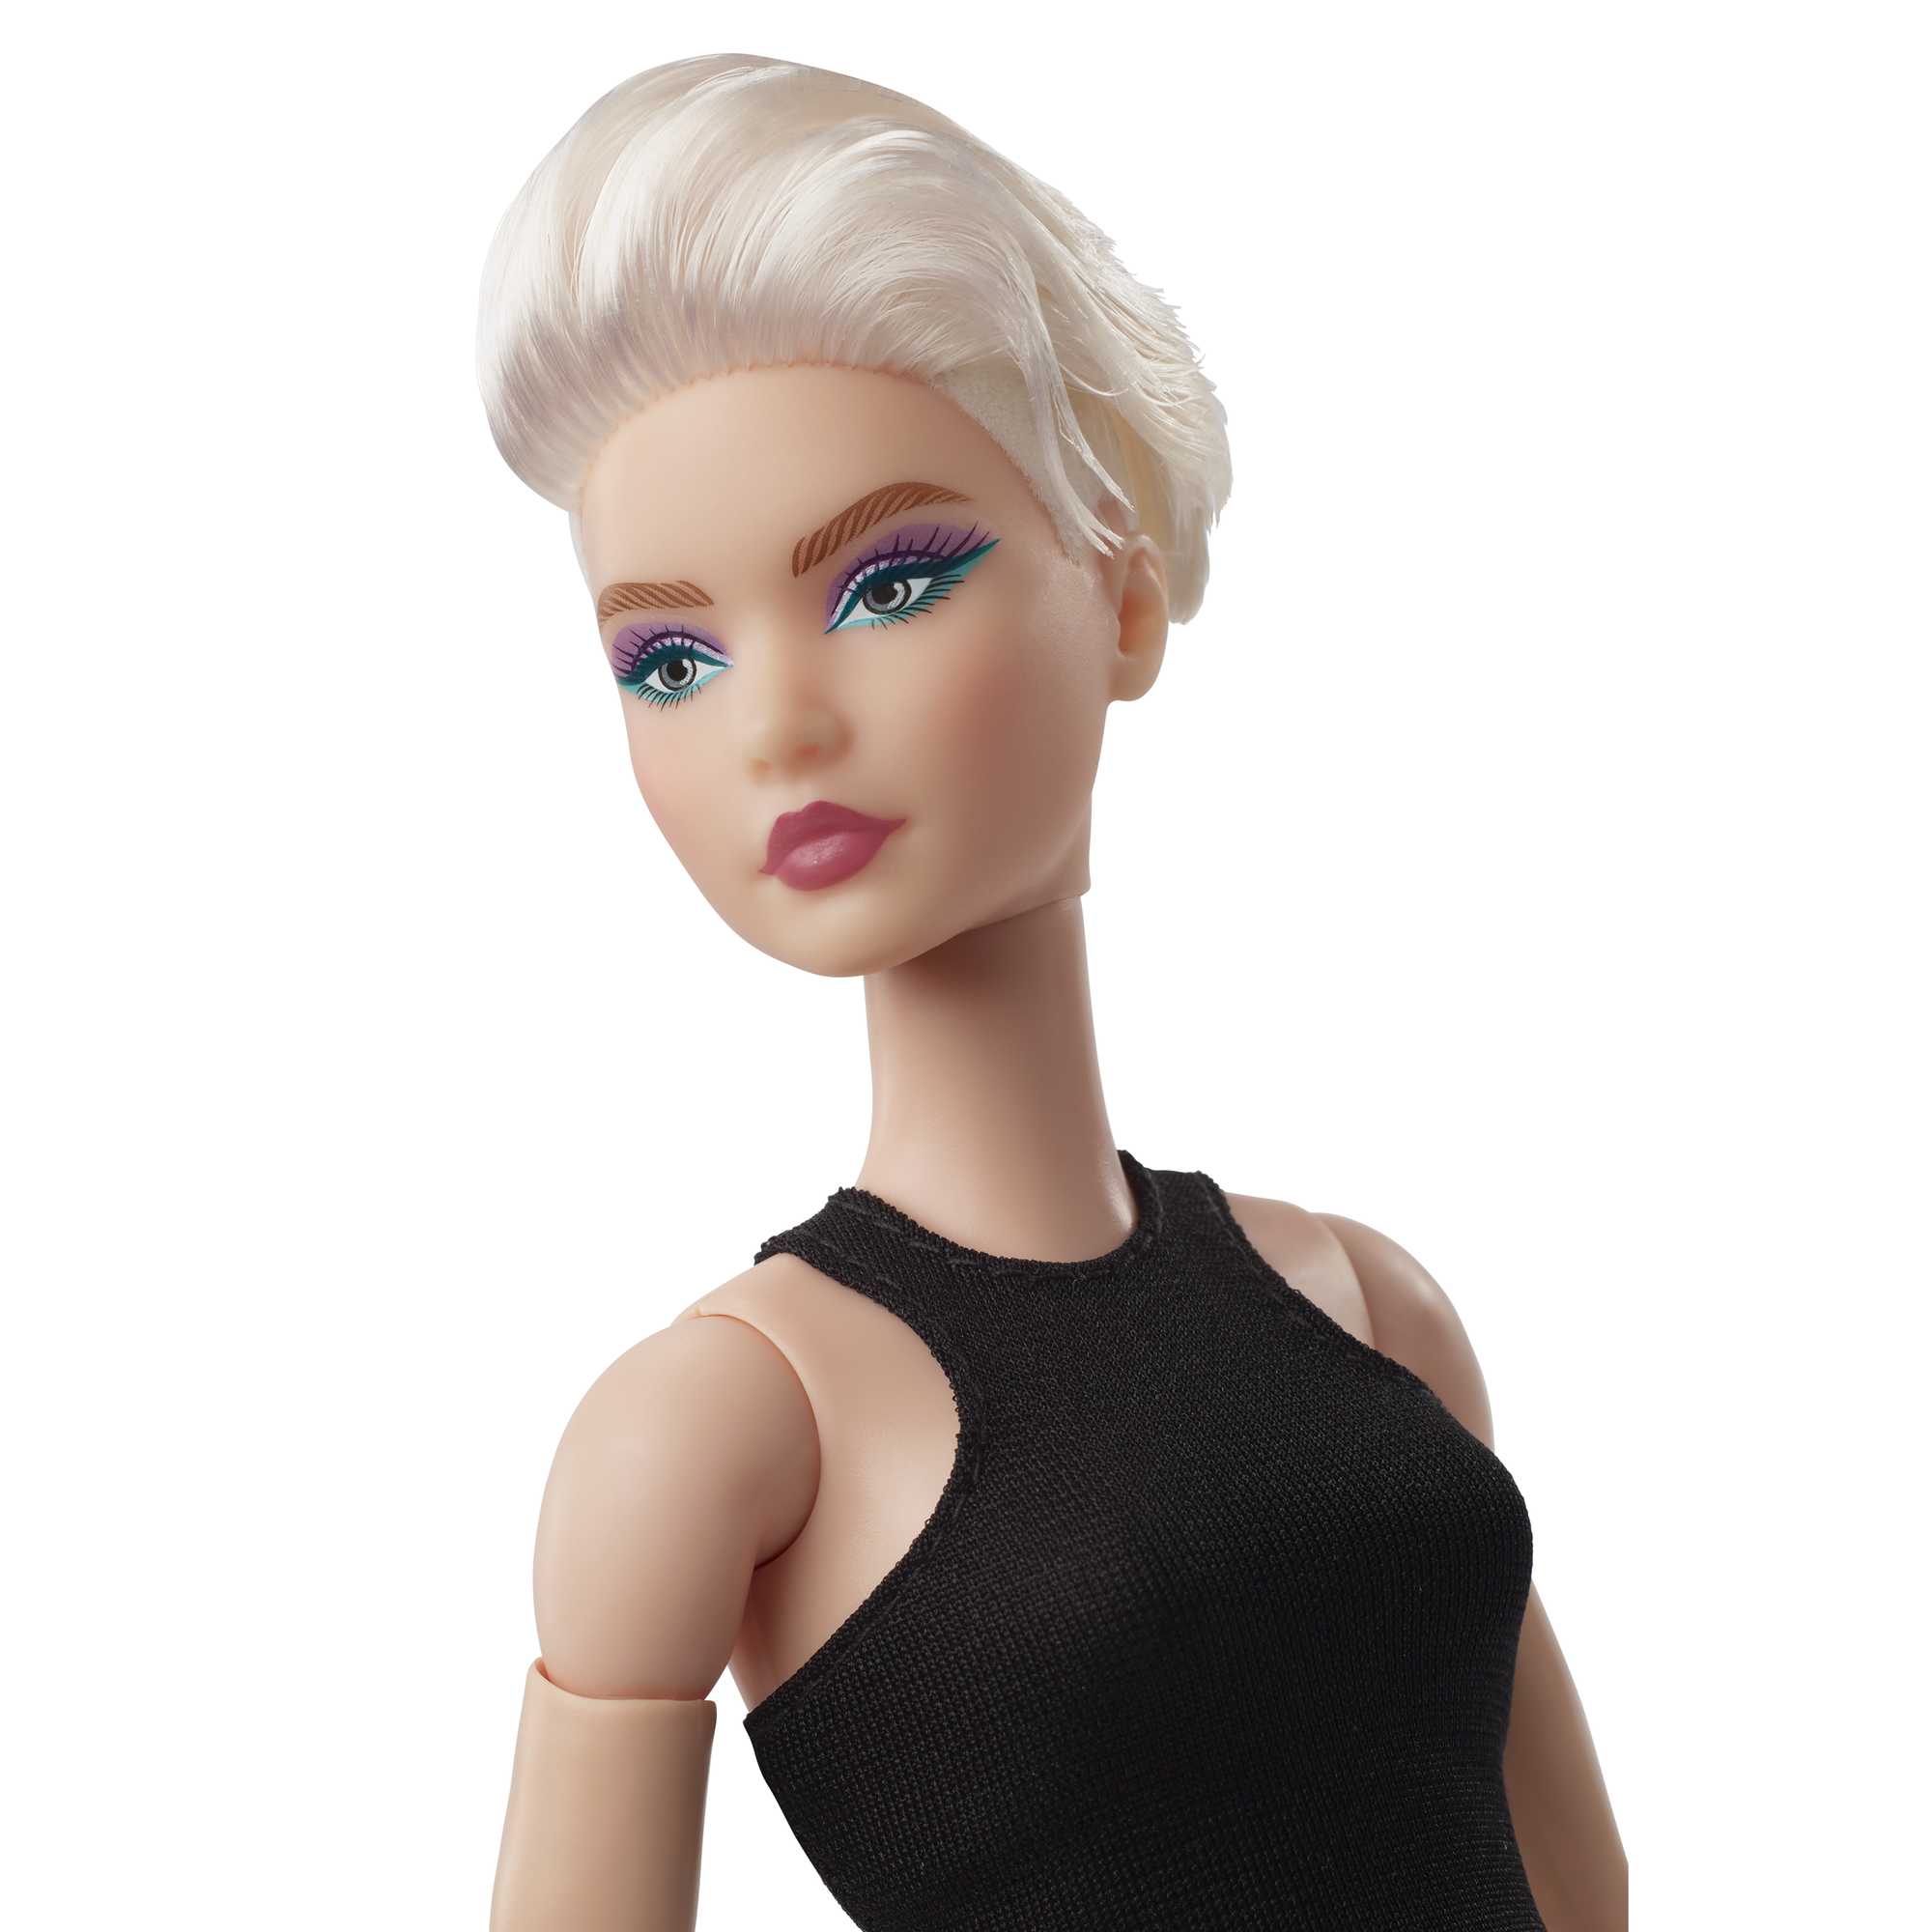 Barbie Signature Fully Posable Barbie Looks Doll (Original, Blonde Pixie Cut) - image 4 of 7